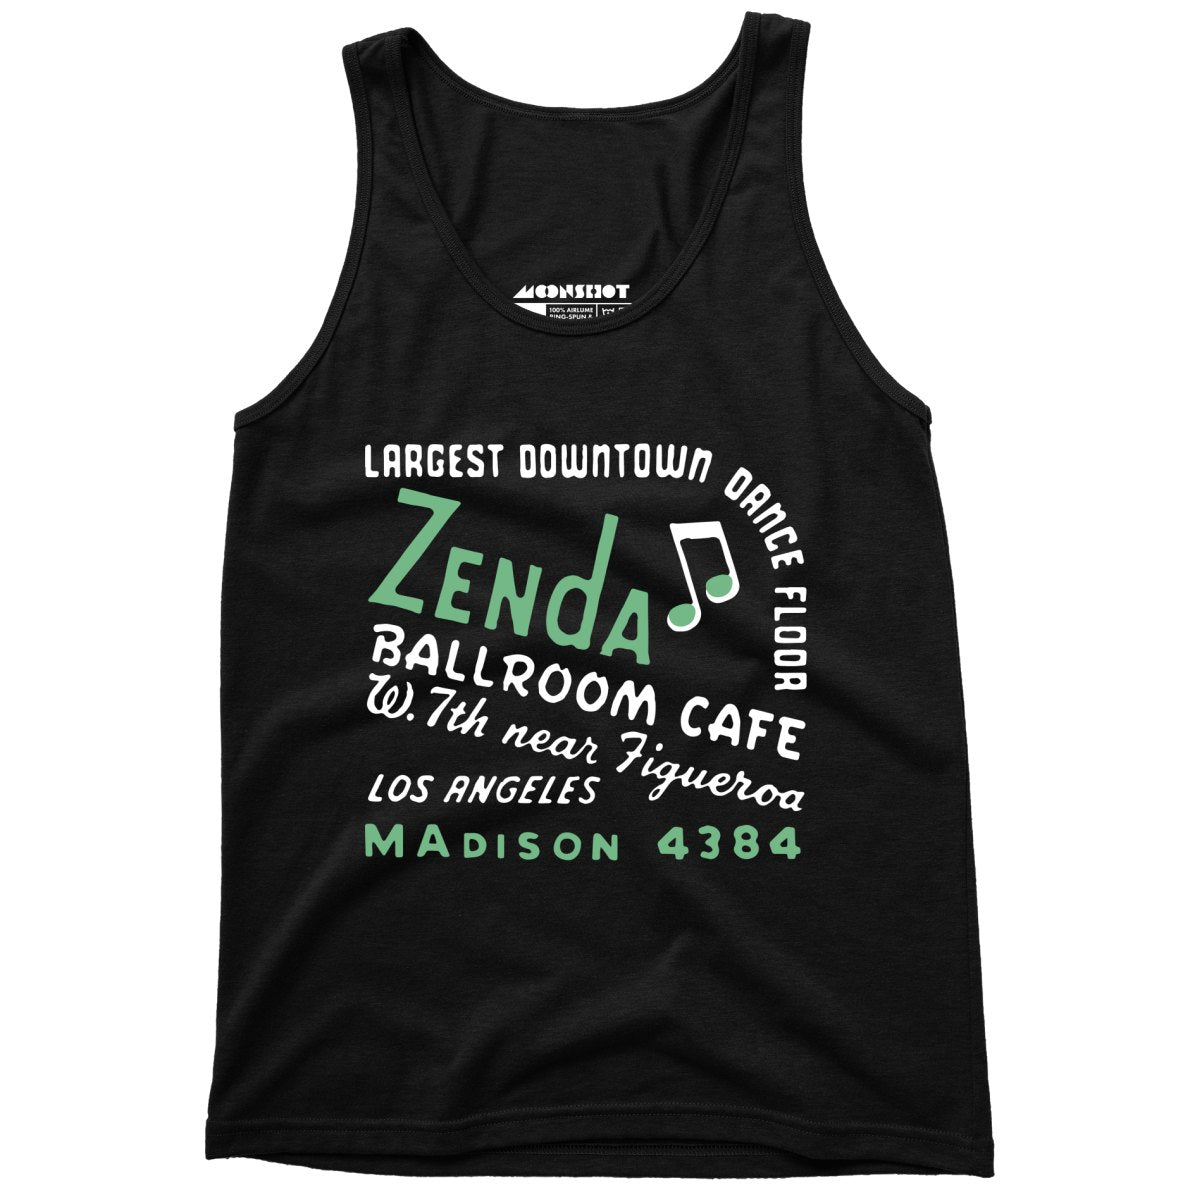 Zenda Ballroom Cafe - Los Angeles, CA - Vintage Nightclub - Unisex Tank Top